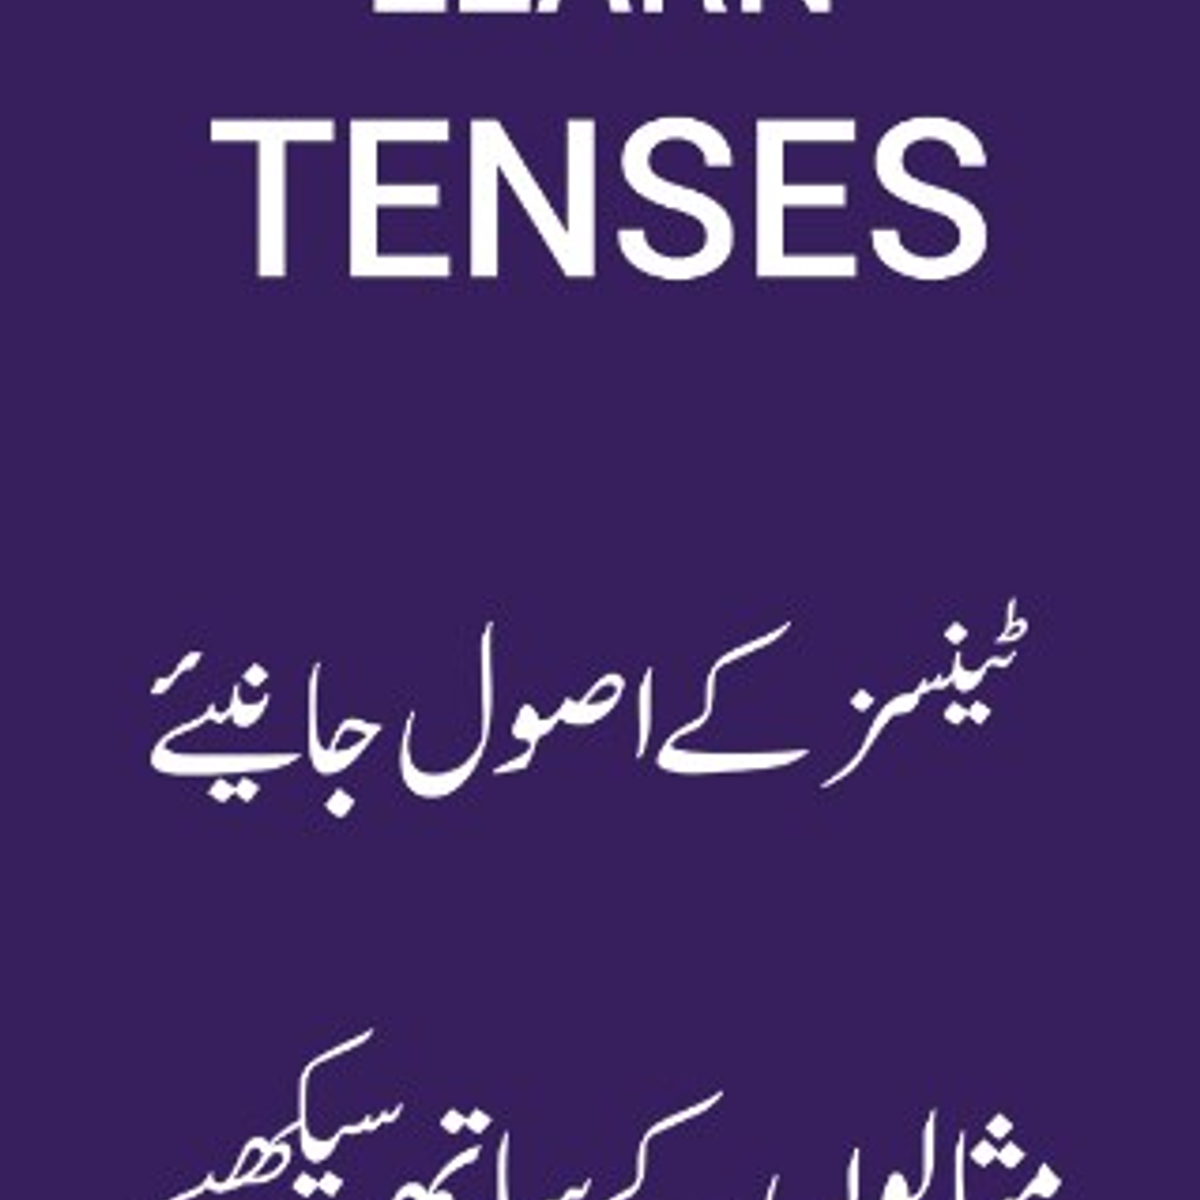 English Tenses In Urdu Alternatives And Similar Apps AlternativeTonet